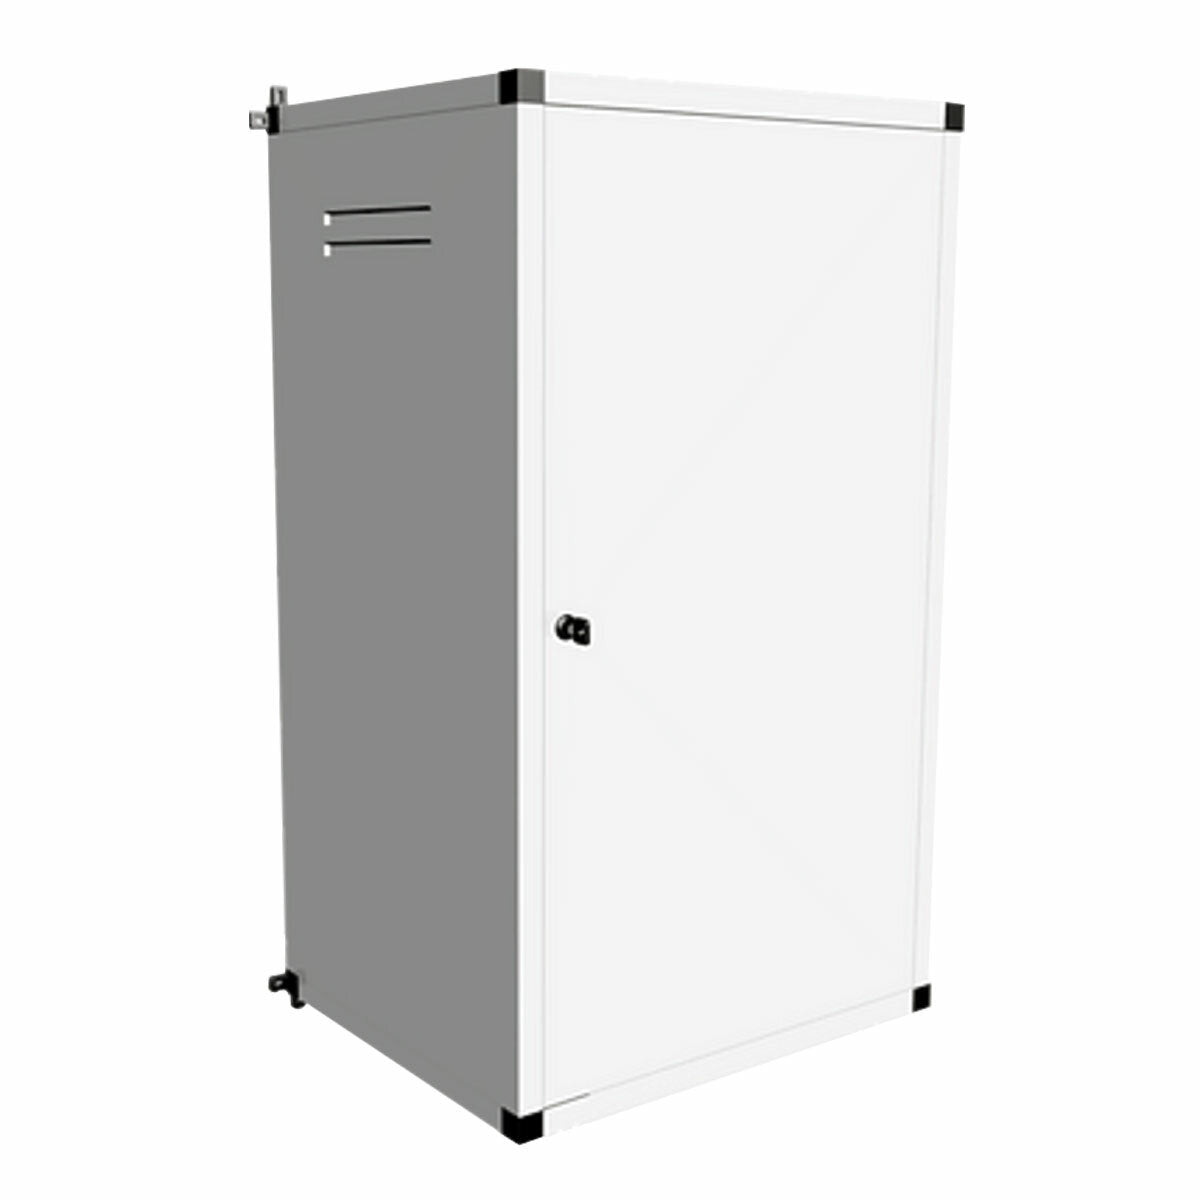 White universal water heater cover boiler cover box H 108 cm - W 60 cm - D 45 cm